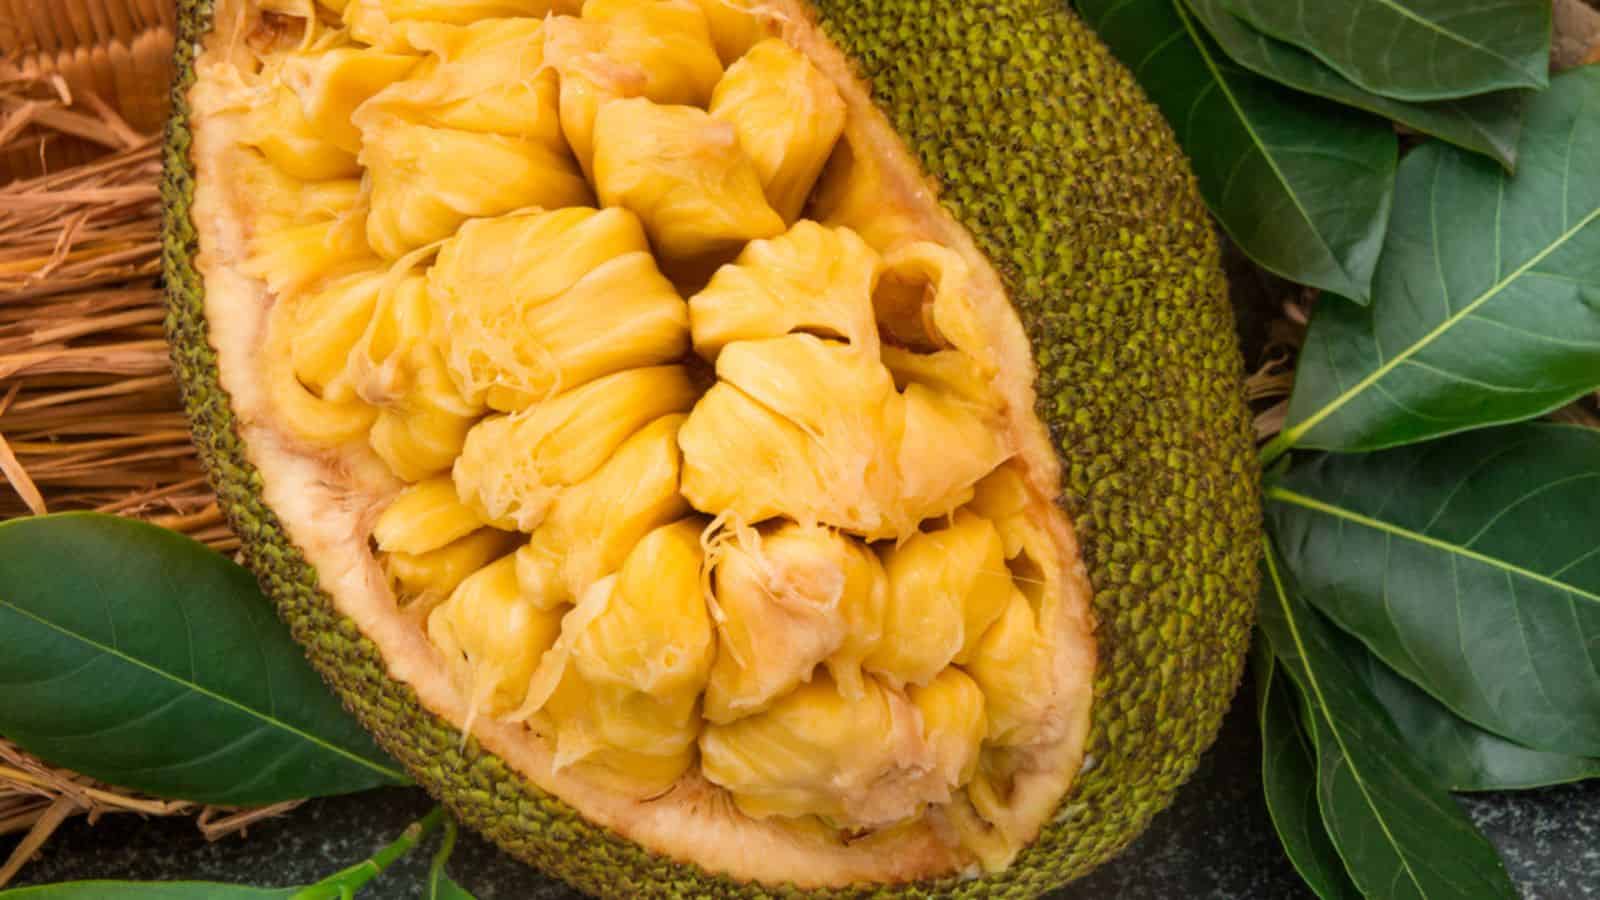 Fresh sweet jackfruit segment ready for eat